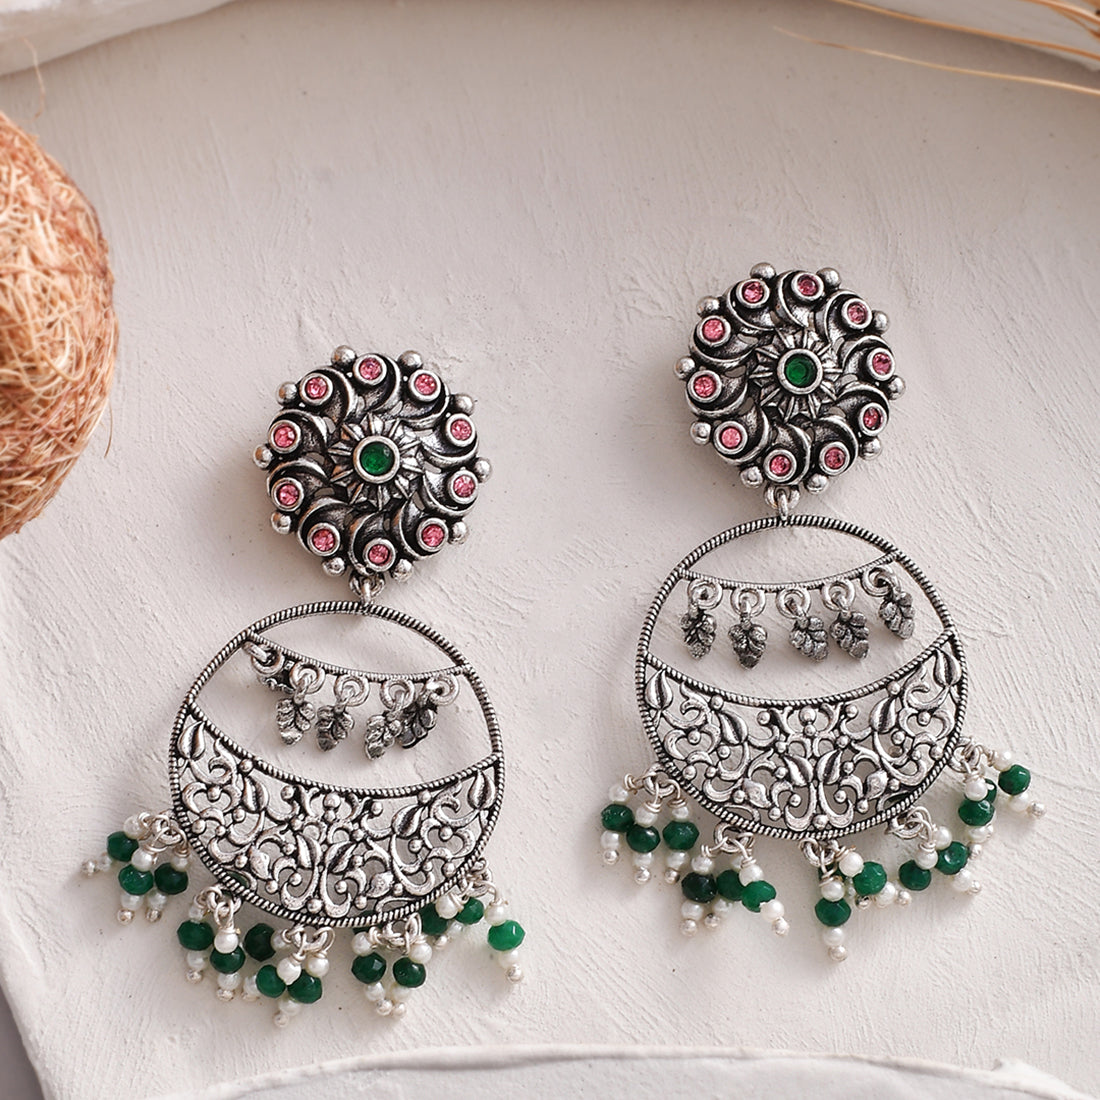 Women's Abharan Pink Stones And Pearls Drop Earrings - Voylla